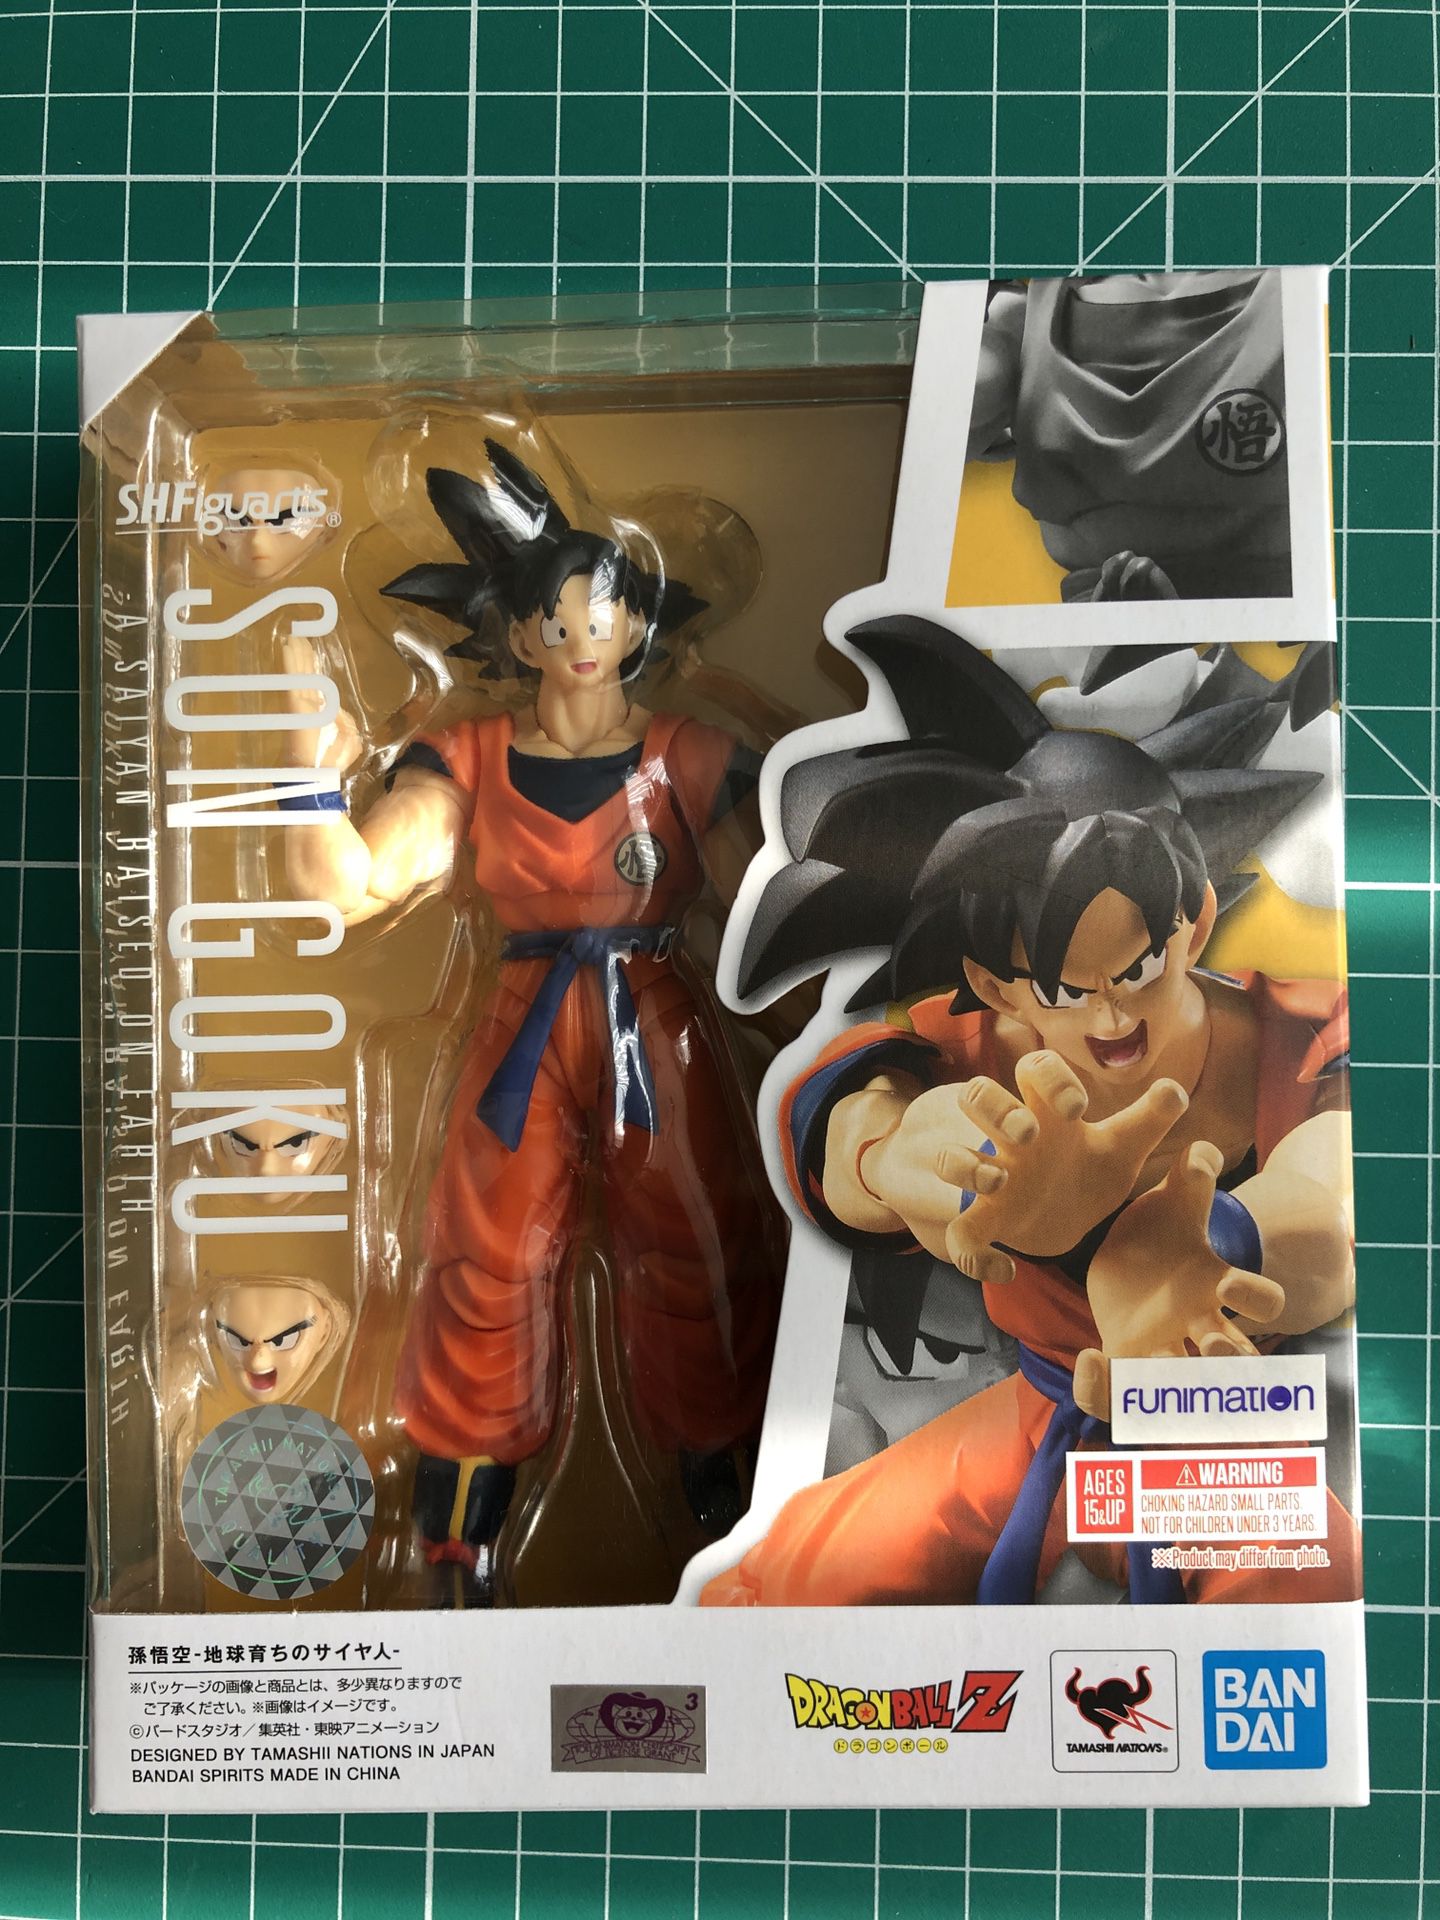 SH Figurats Son Goku Action Figure